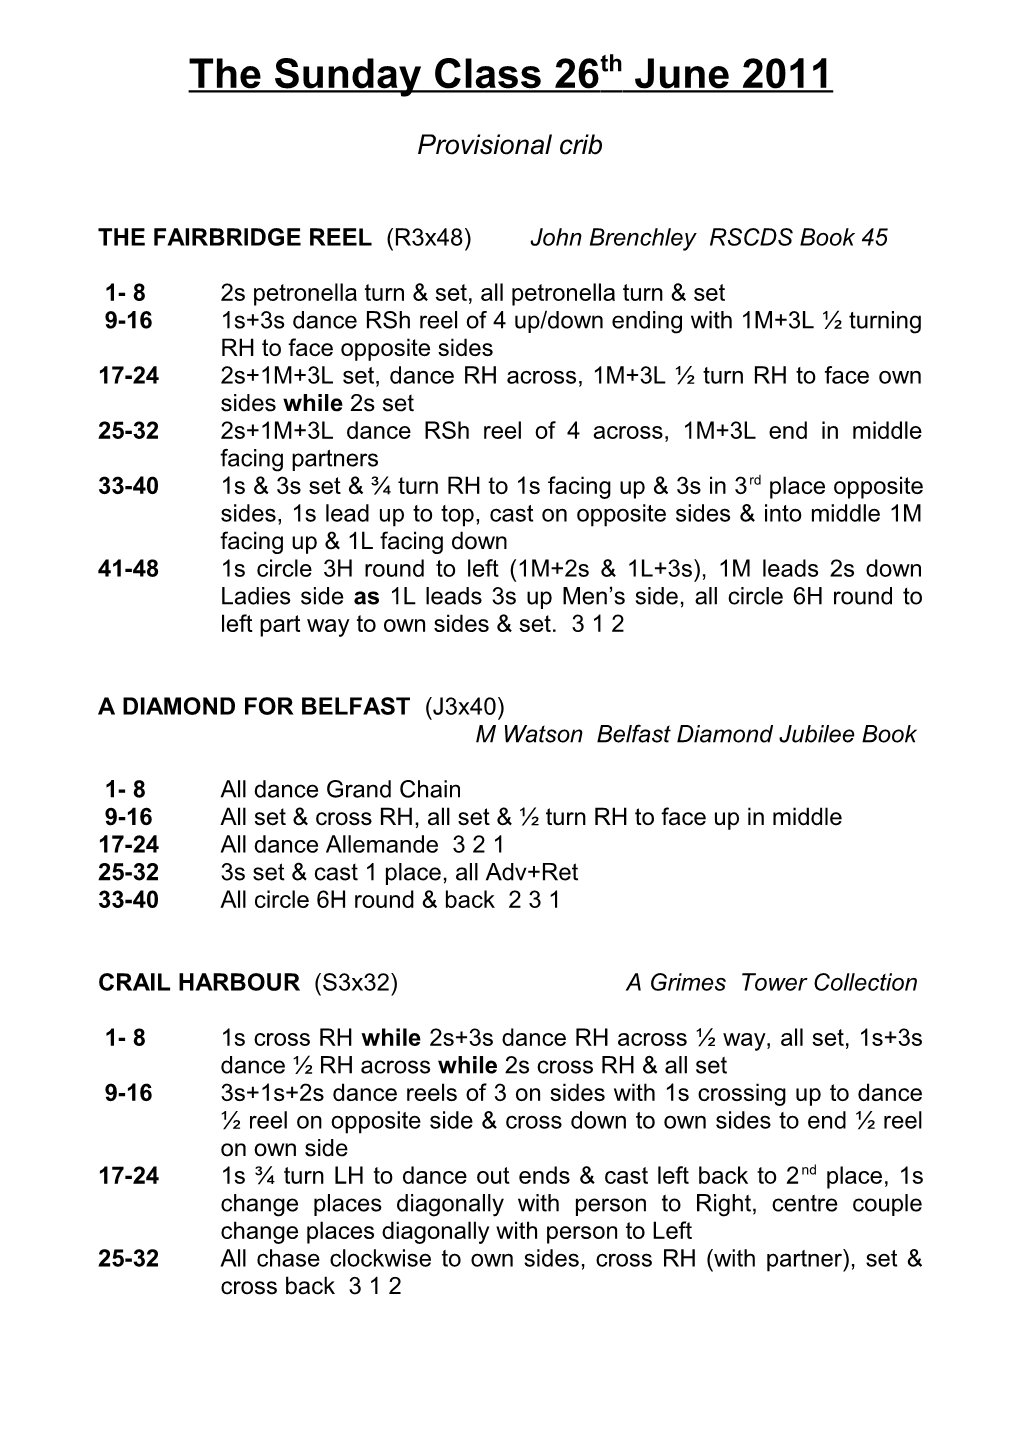 THE FAIRBRIDGE REEL (R3x48)John Brenchleyrscds Book 45